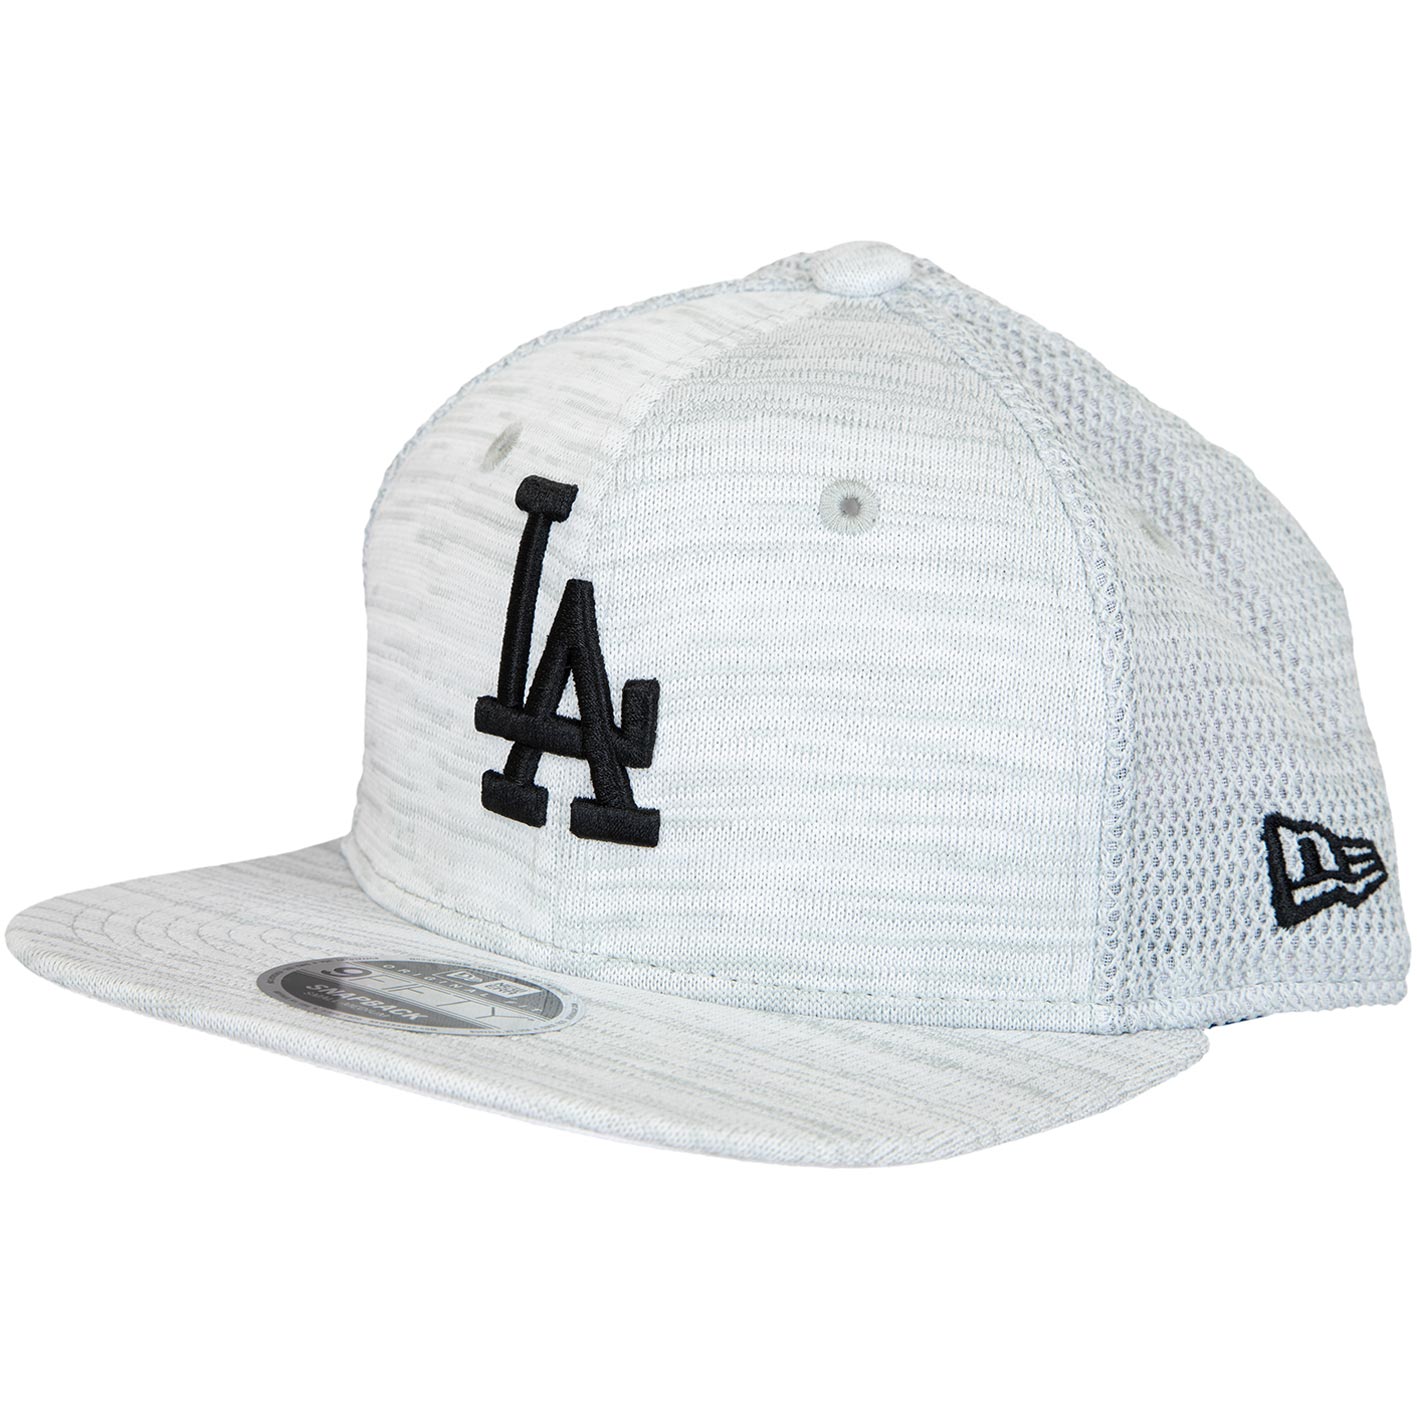 ☆ New Era 9Fifty Snapback Cap Engineered Fit L.A.Dodgers weiß/schwarz -  hier bestellen!